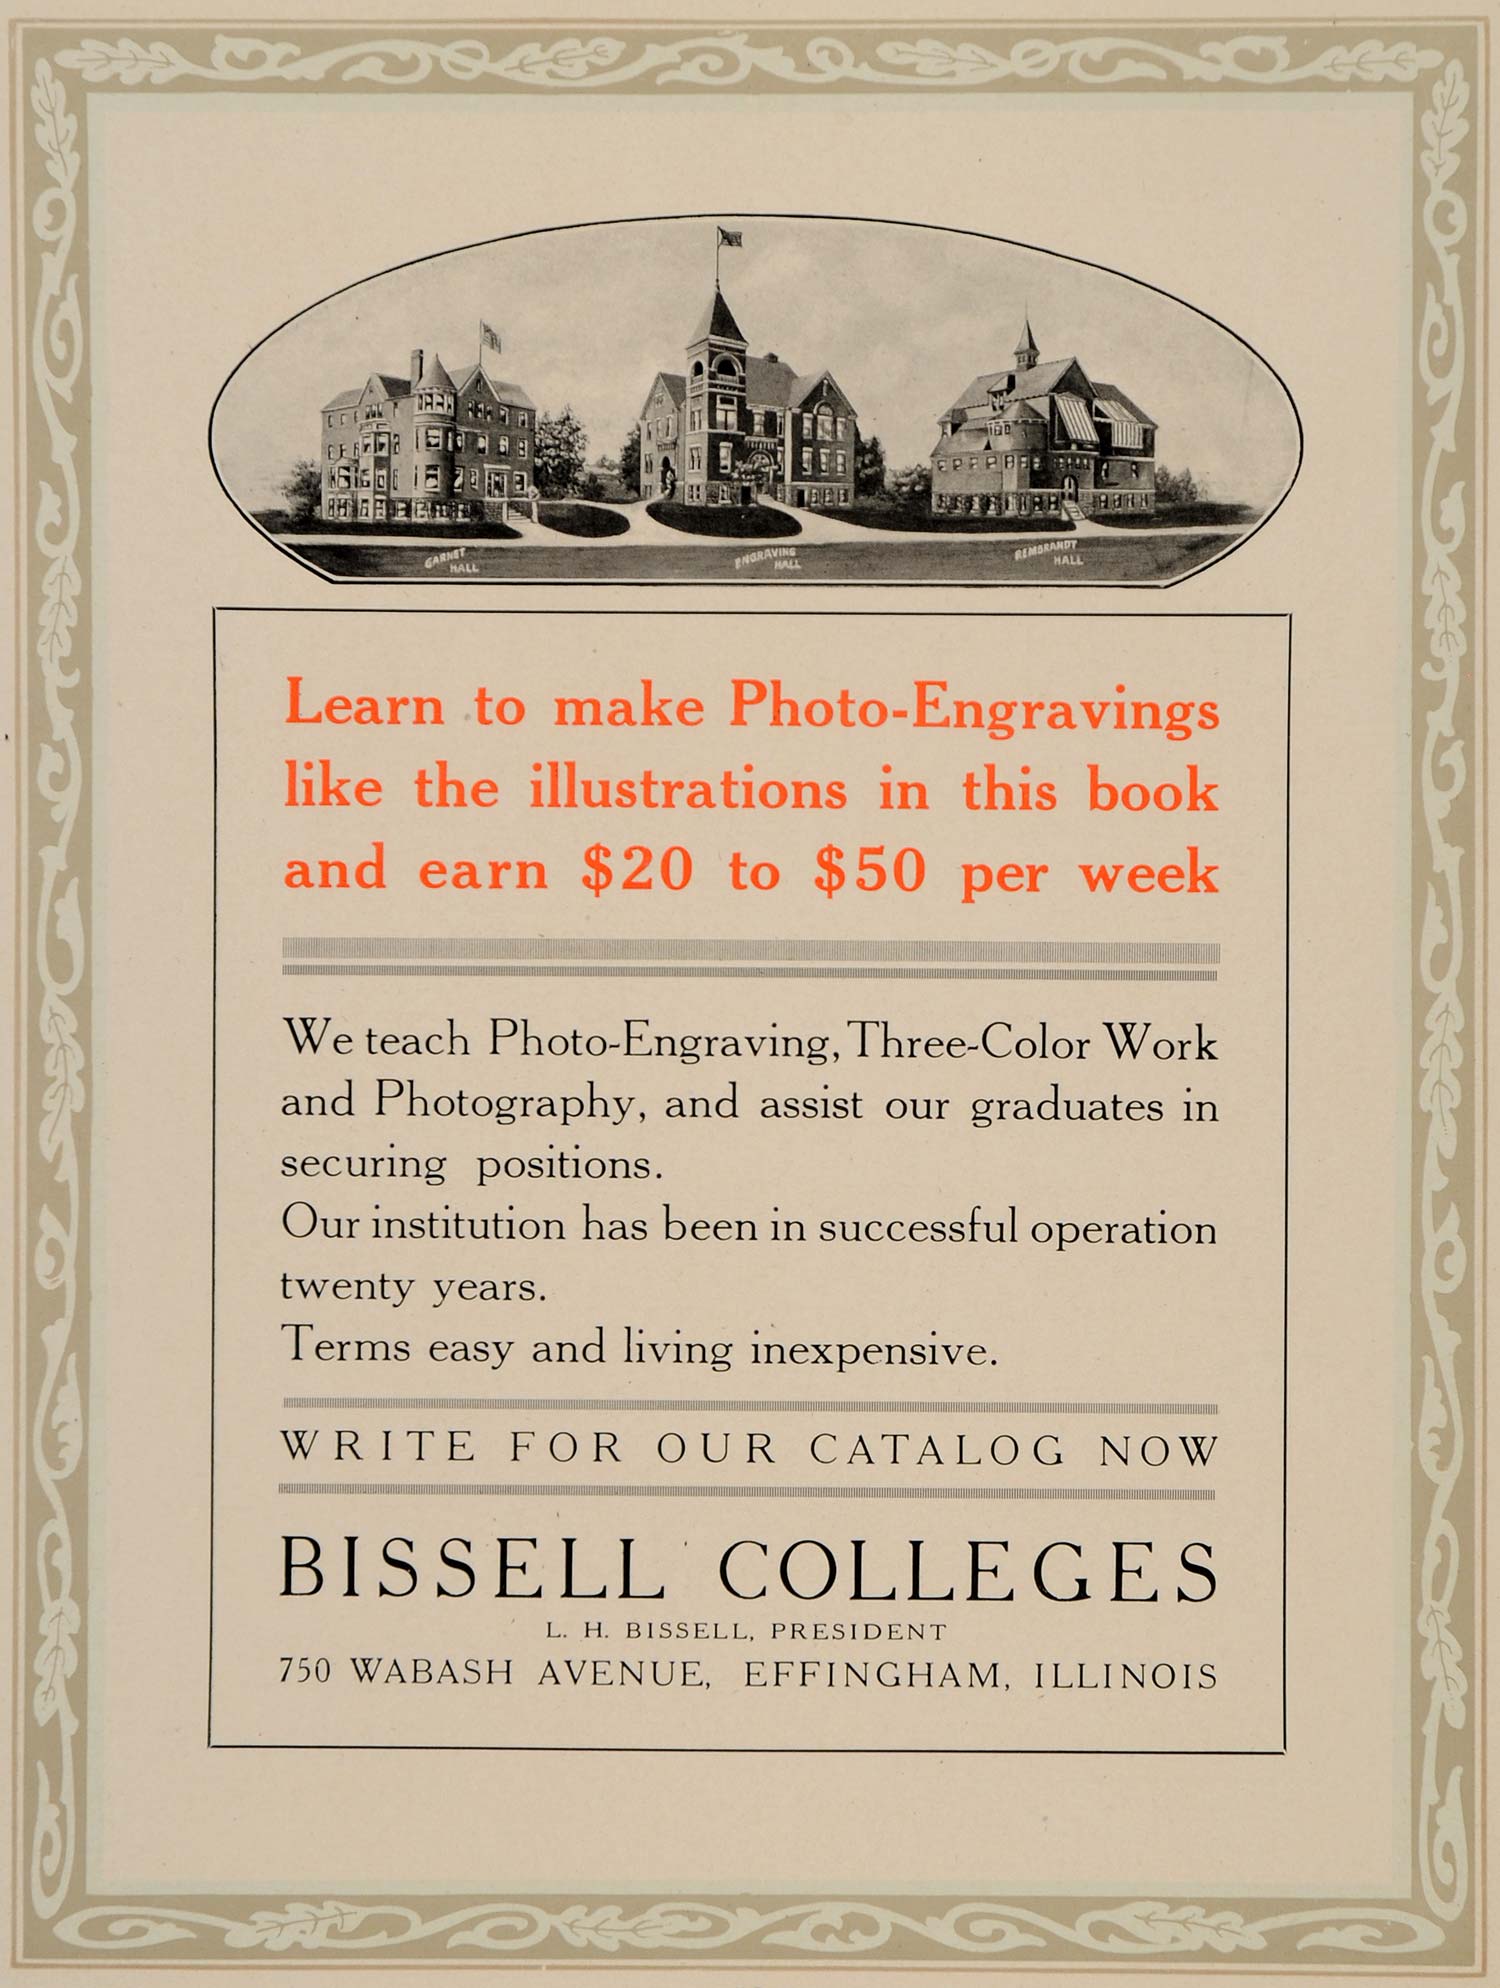 1913 Ad Bissell College Effingham IL Photo-engraving - ORIGINAL ADVERTISING GAC1